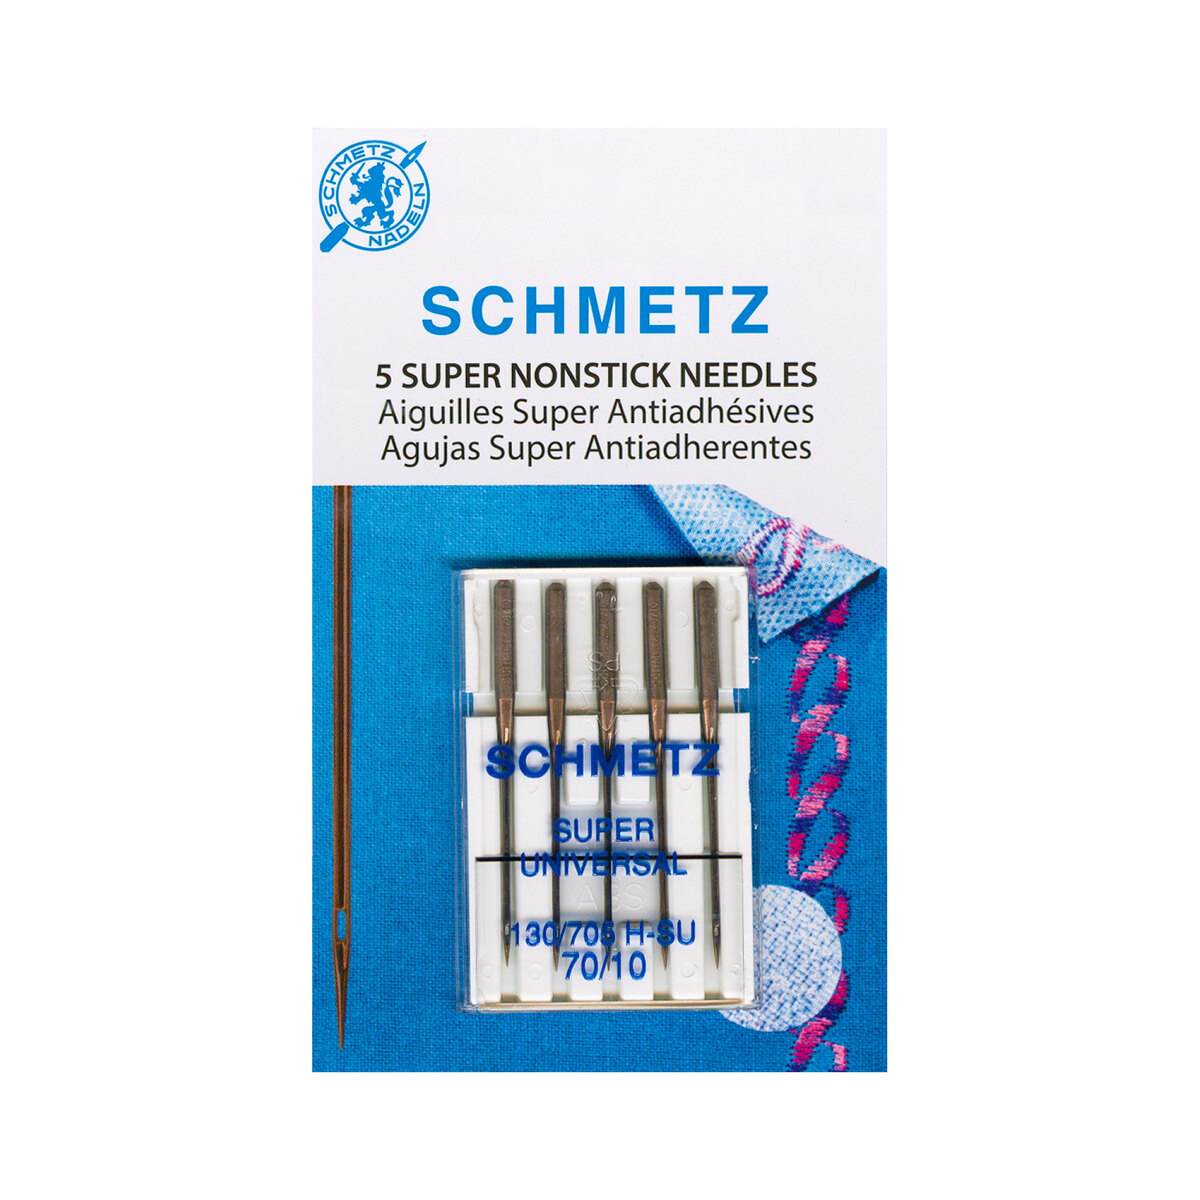 SCHMETZ Extra Wide Twin Needle